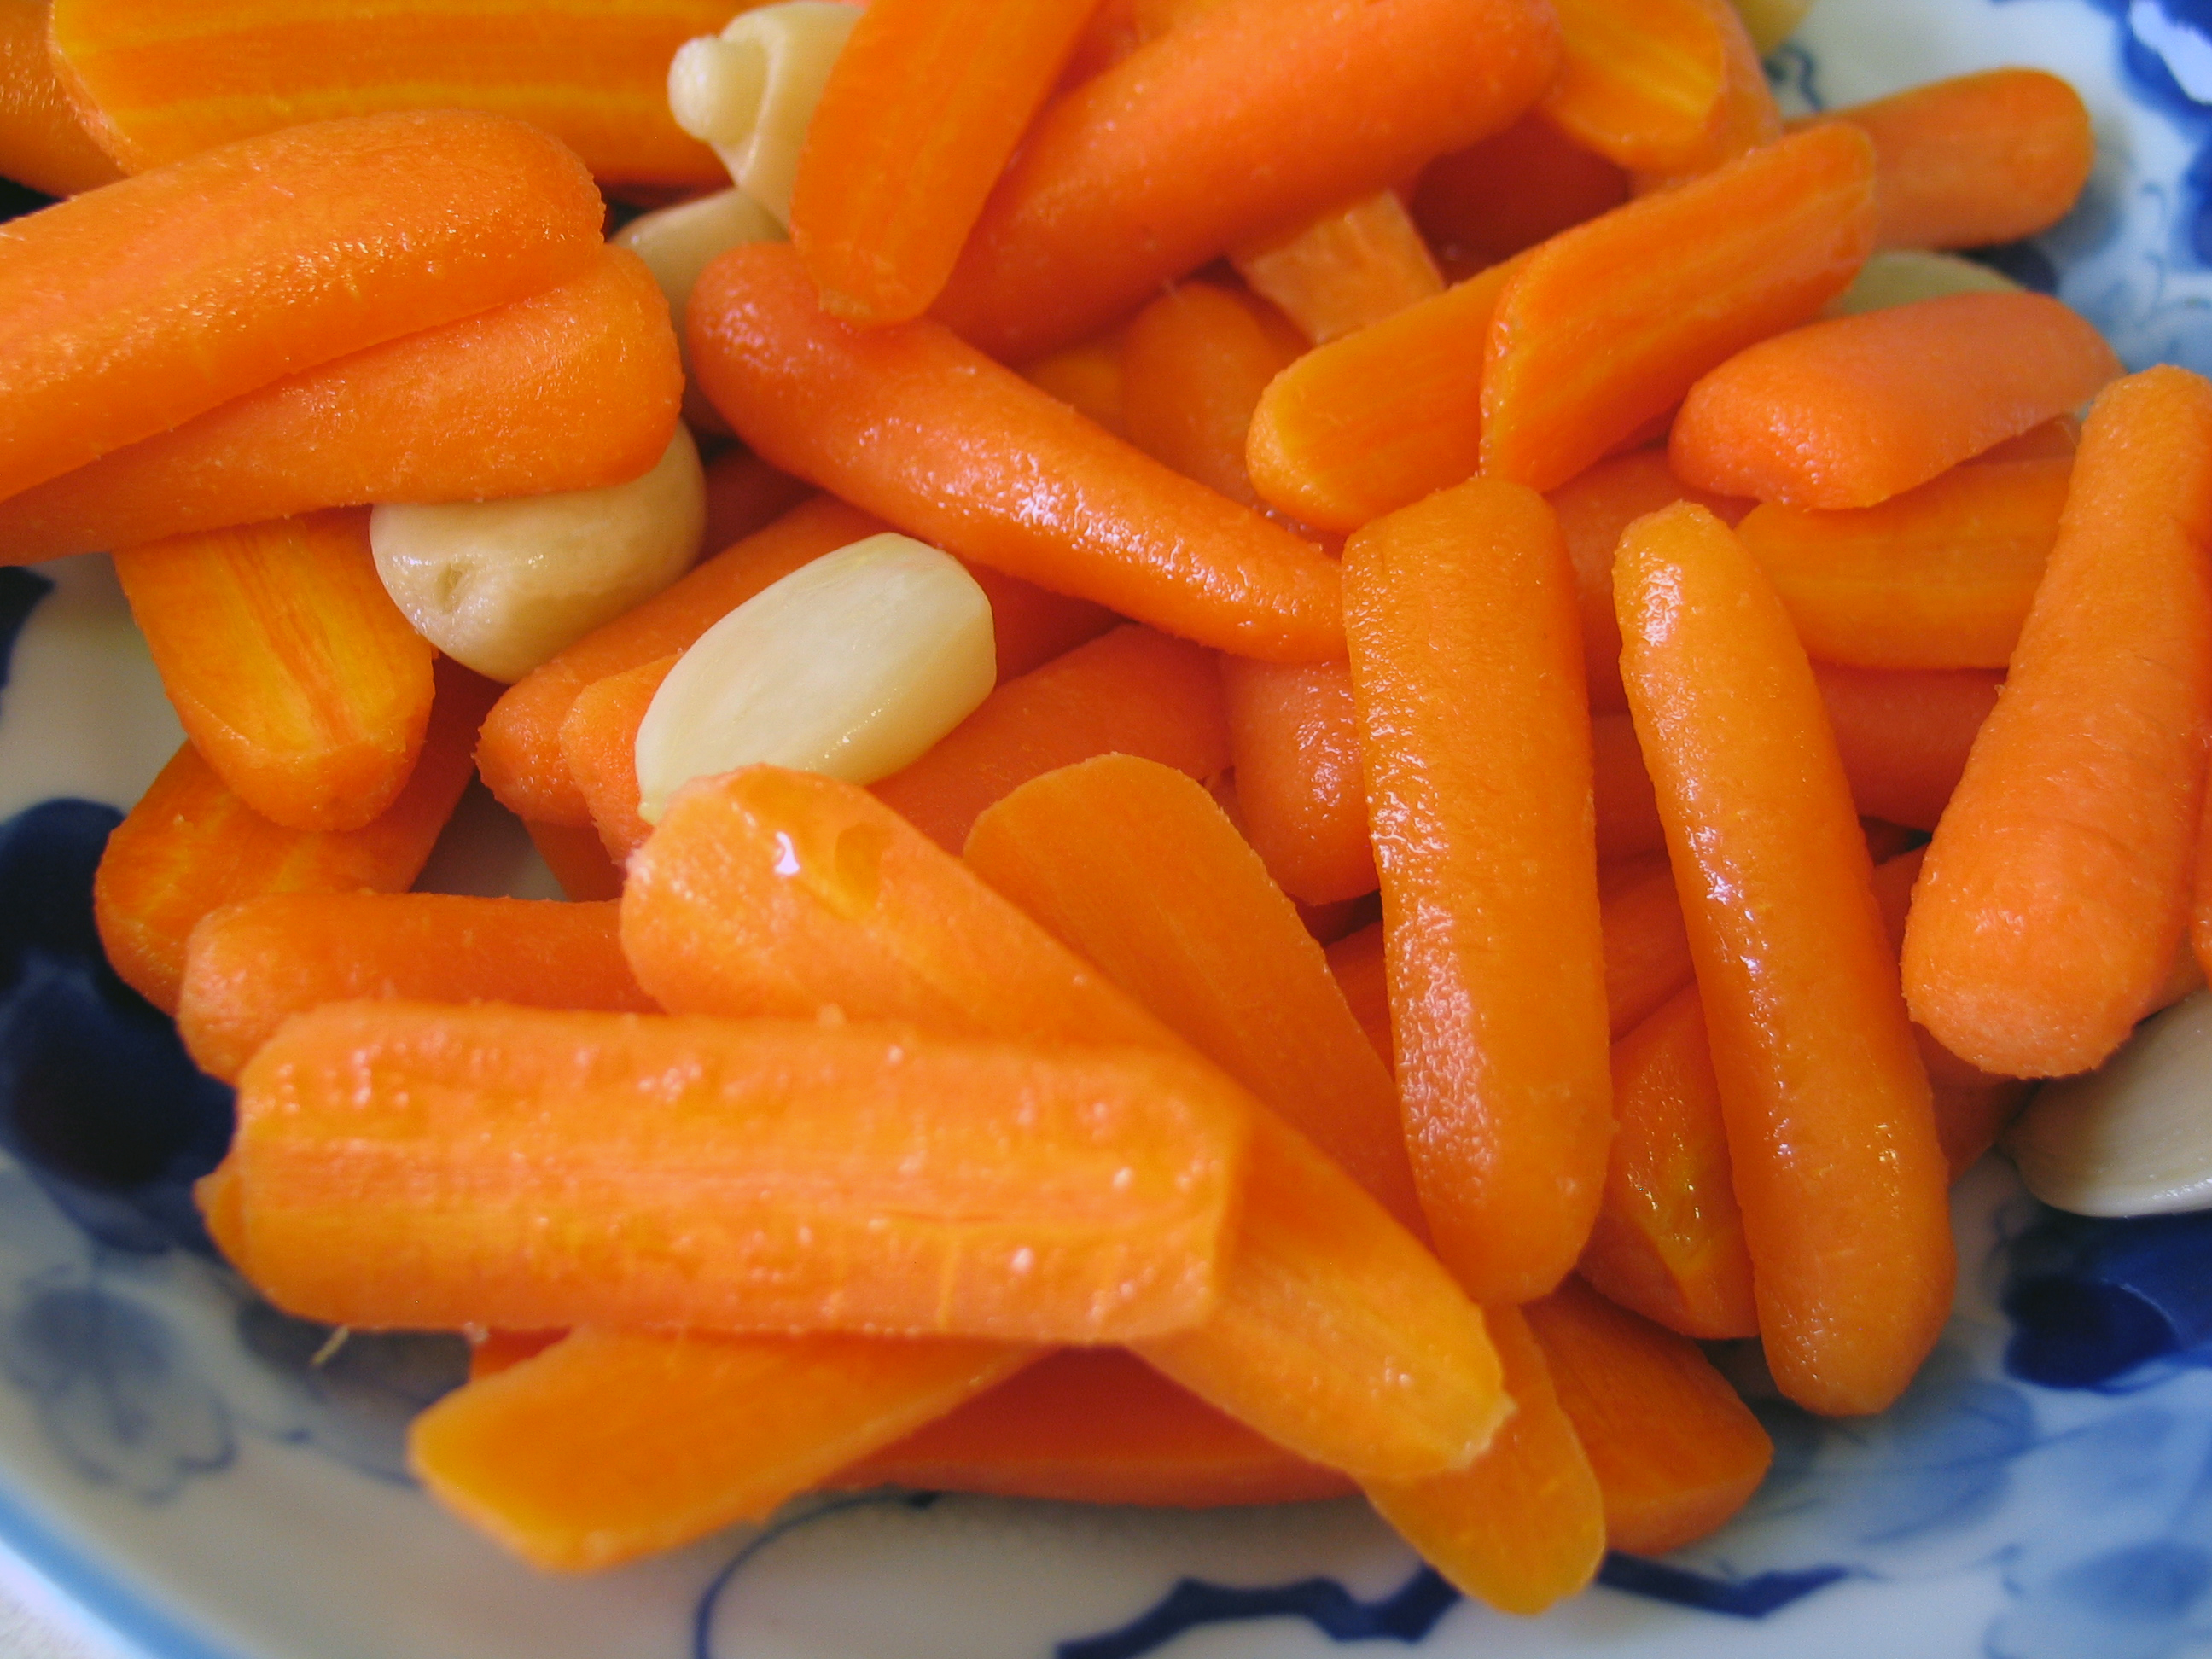 Balsamic-Glazed Carrots with Garlic